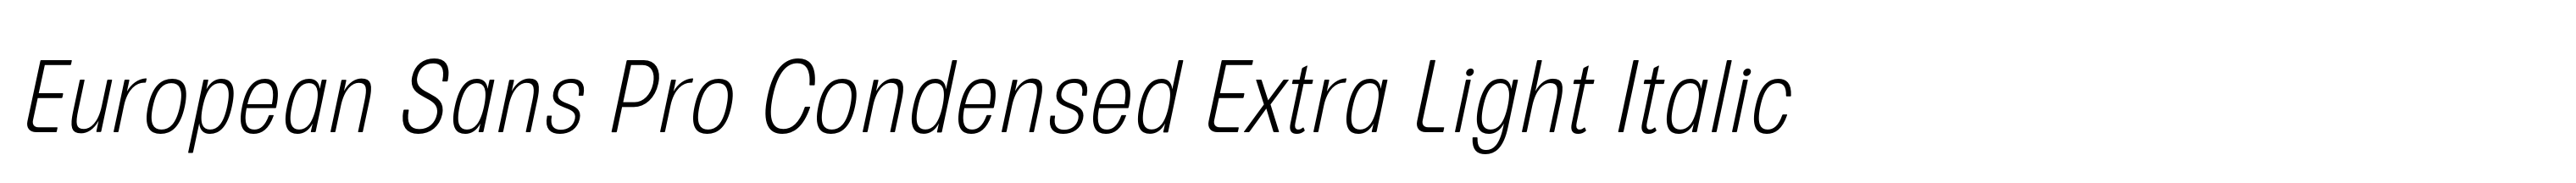 European Sans Pro Condensed Extra Light Italic